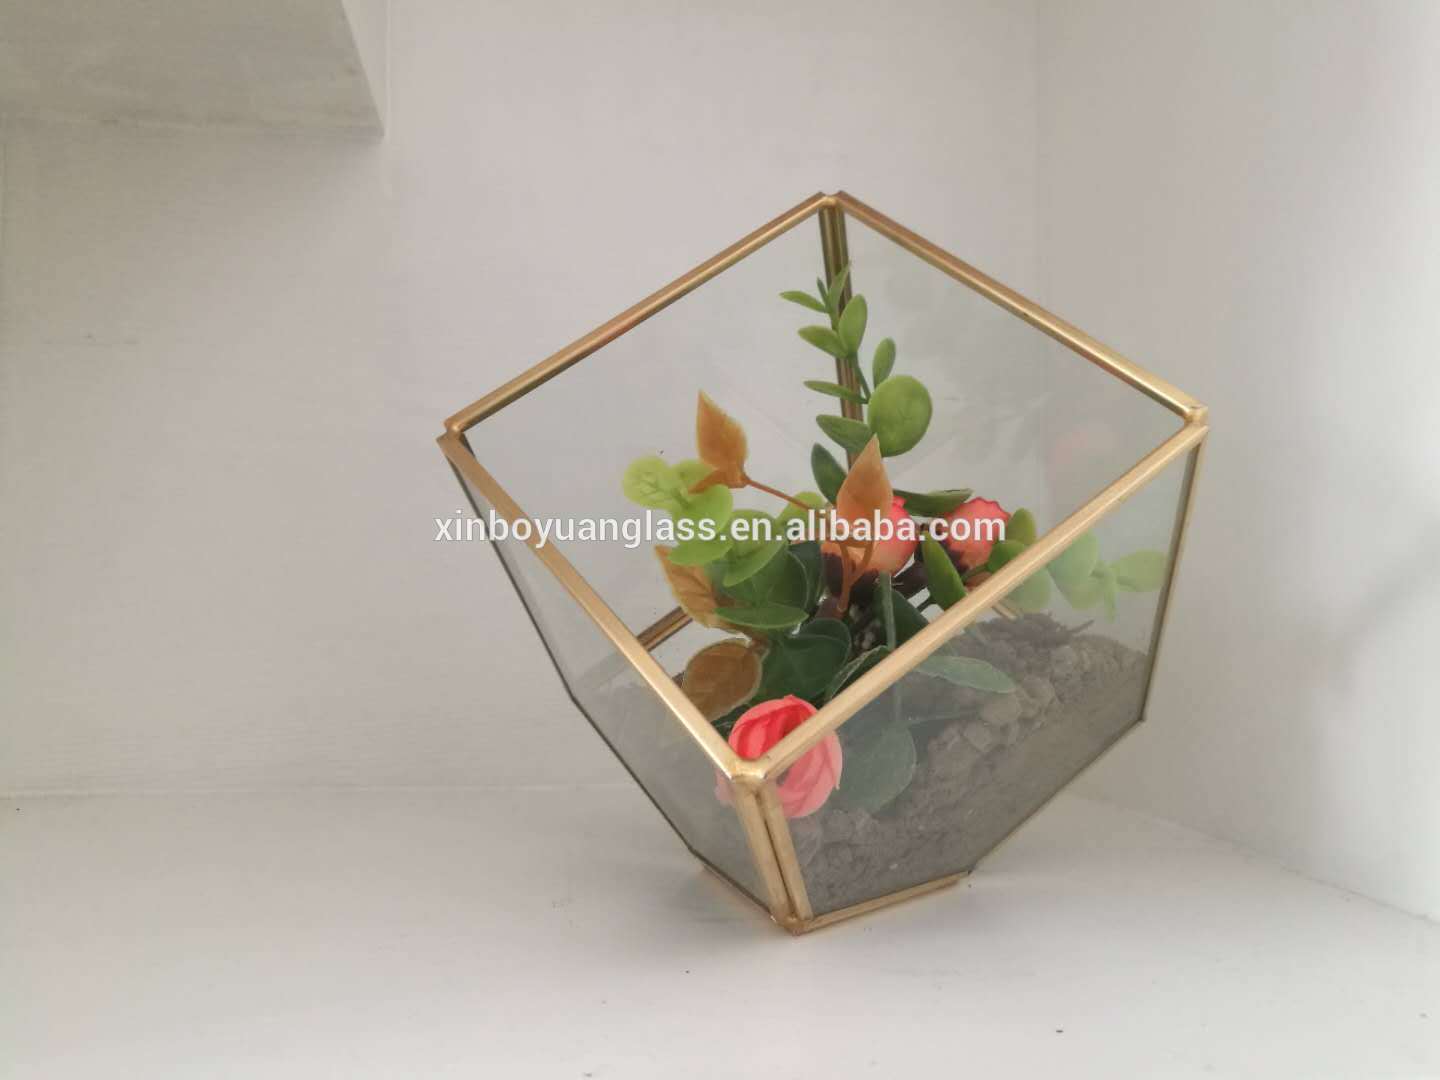 Flower glass vase Geometric plant terrarium for home decoration